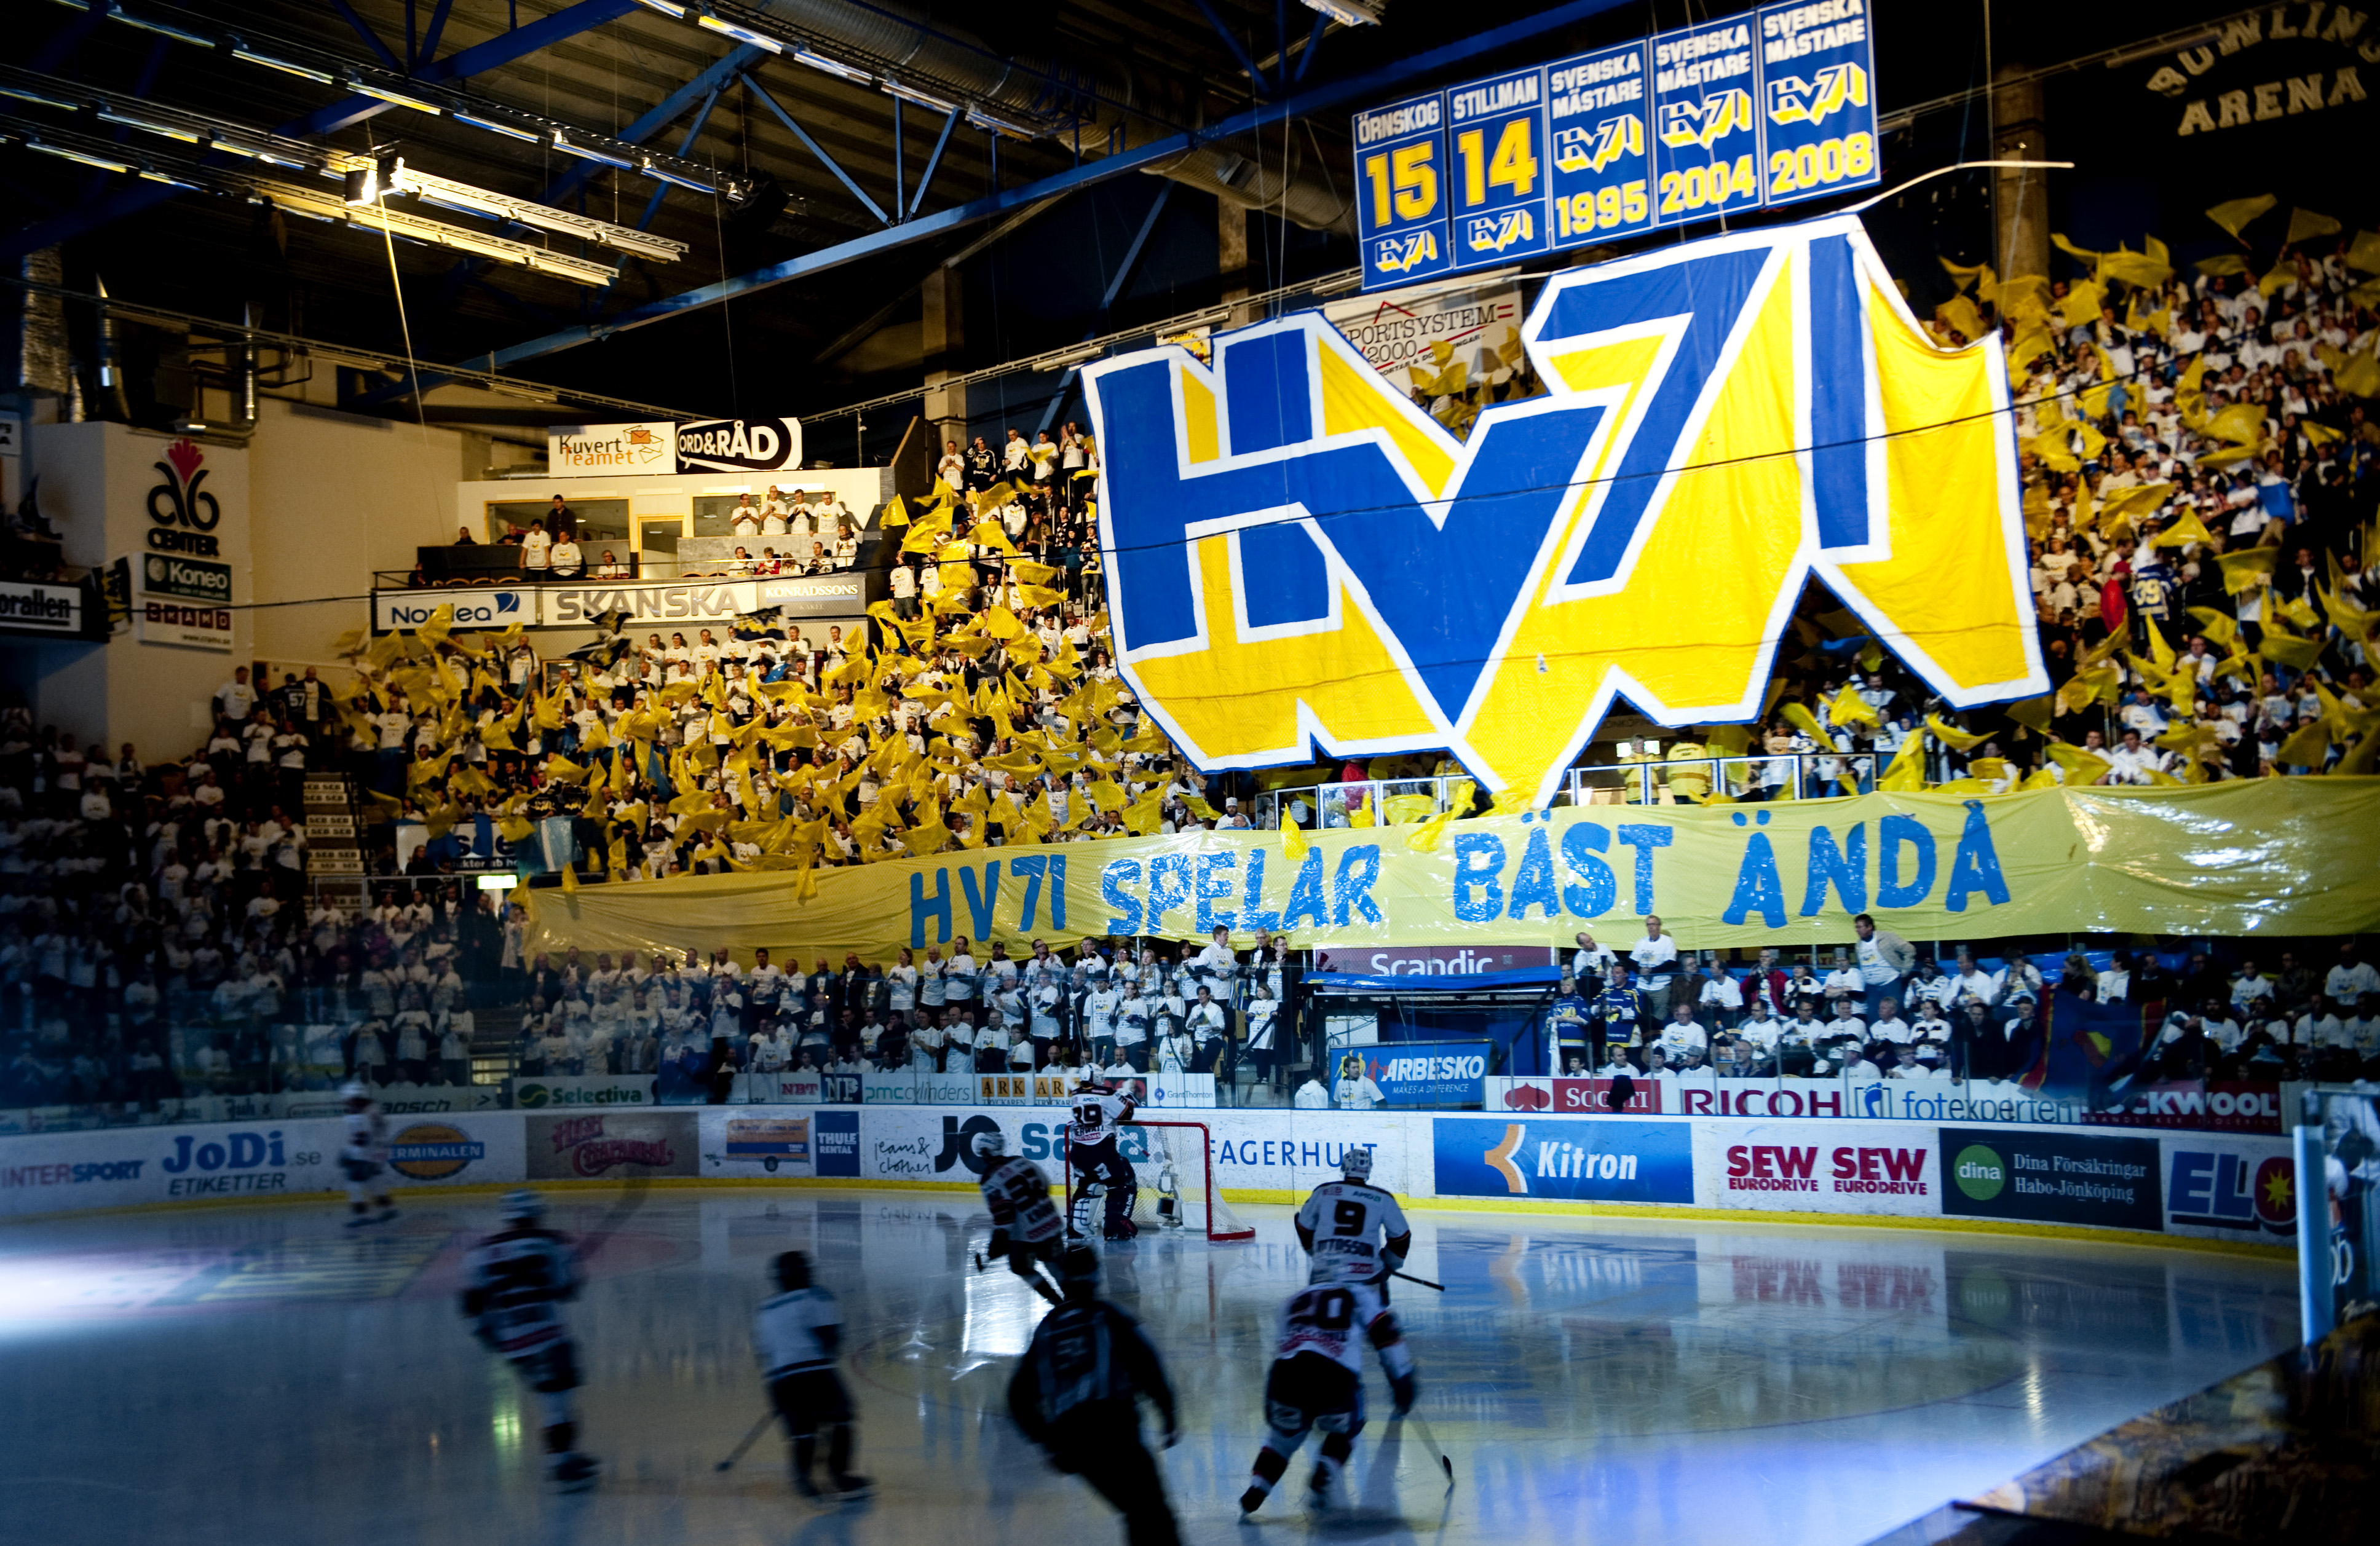 Jimmie Ölvestad, publik, Hovet, Globen, Kristofer Ottosson, ishockey, Stockholm, SM-final, HV71, elitserien, SM-slutspel, Djurgården IF, Kinnarps Arena, Jonkoping